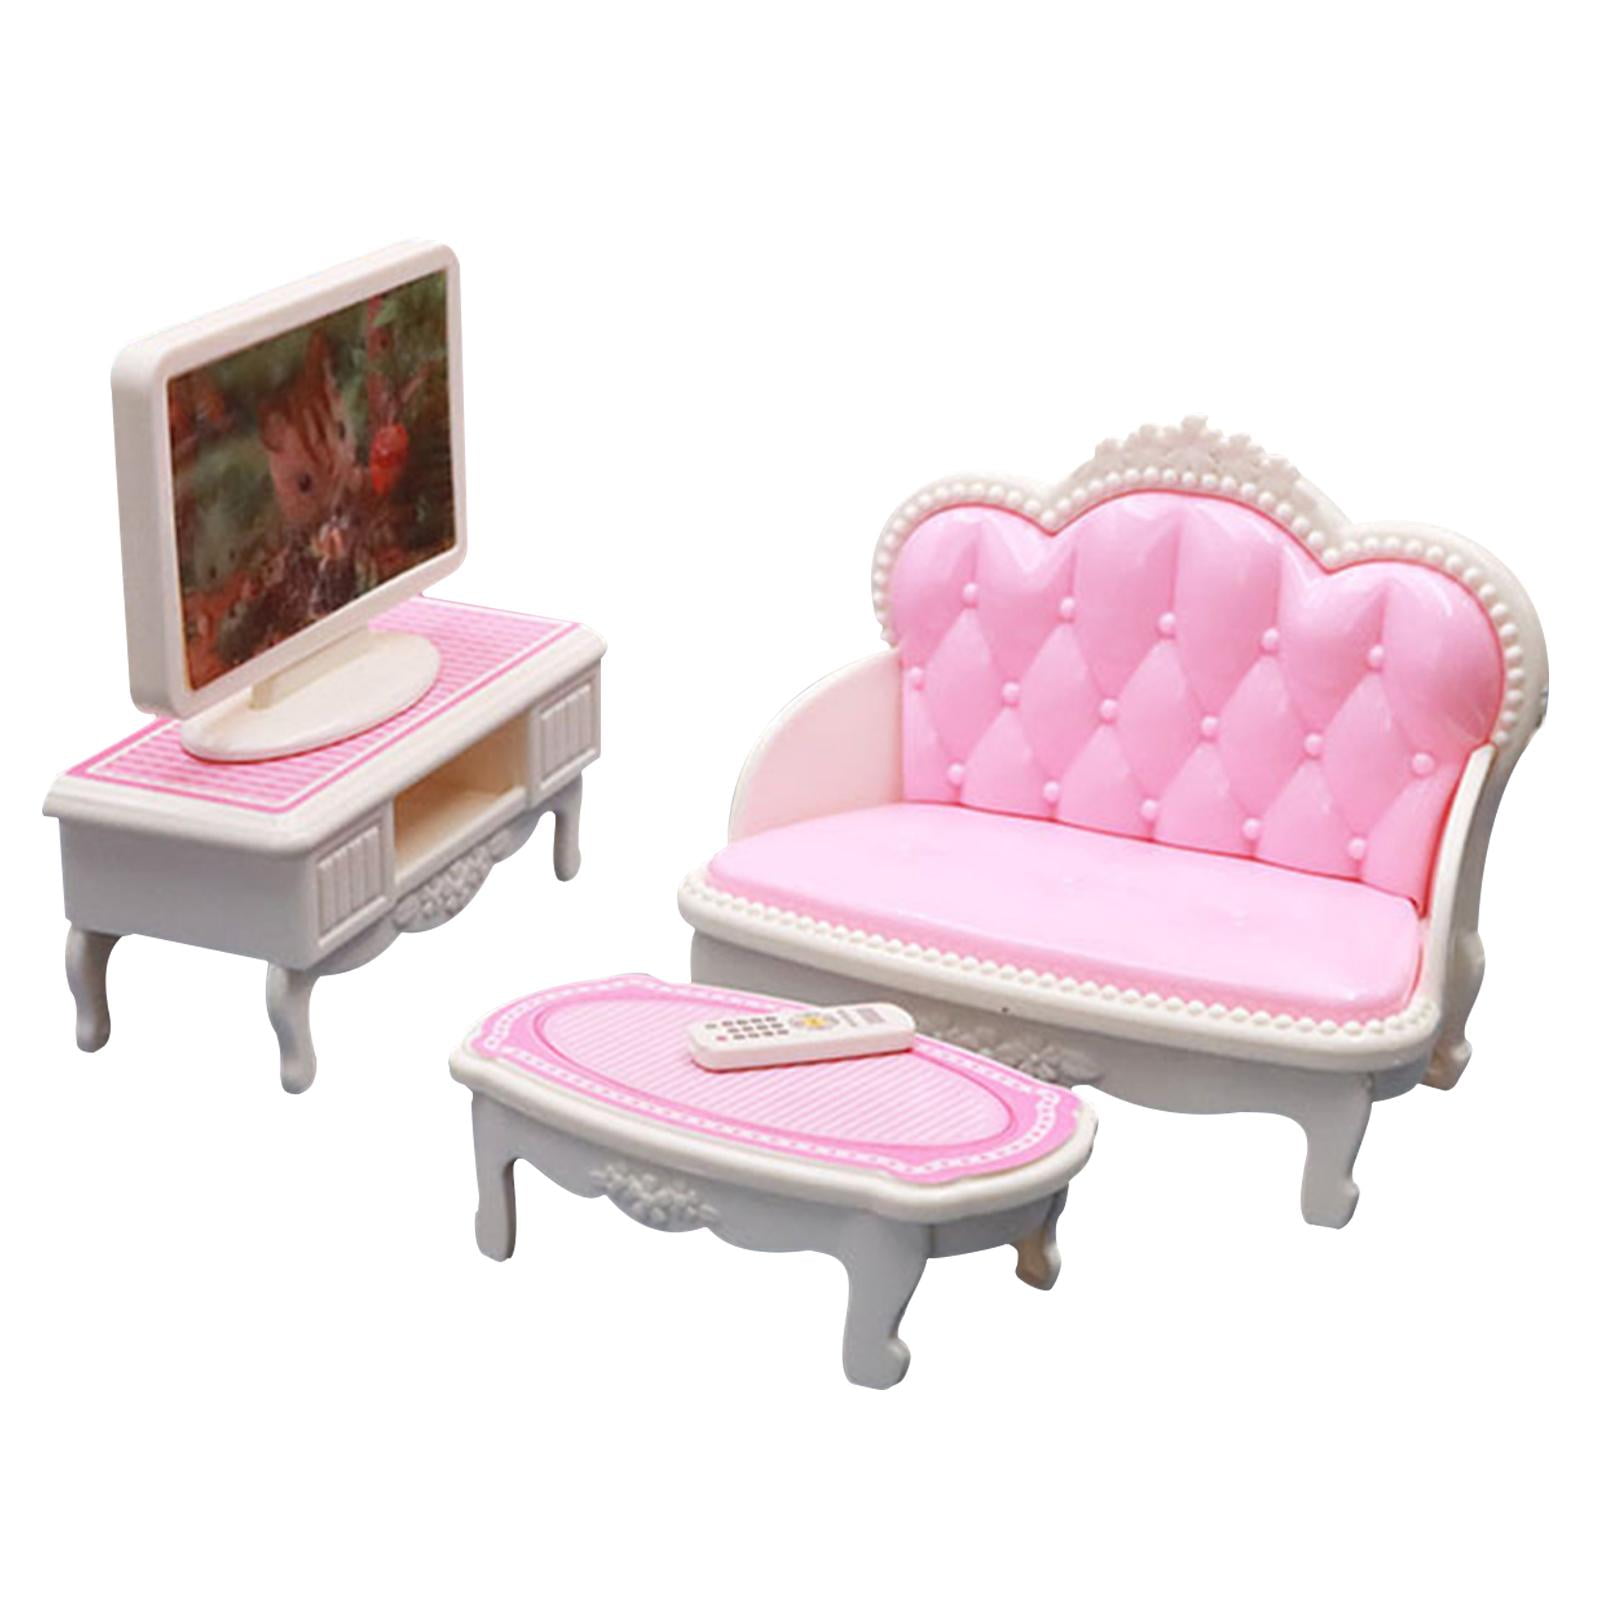 1/12 Miniature Dollhouse Living Room Furniture Kit TV Table Plant Rug Set 